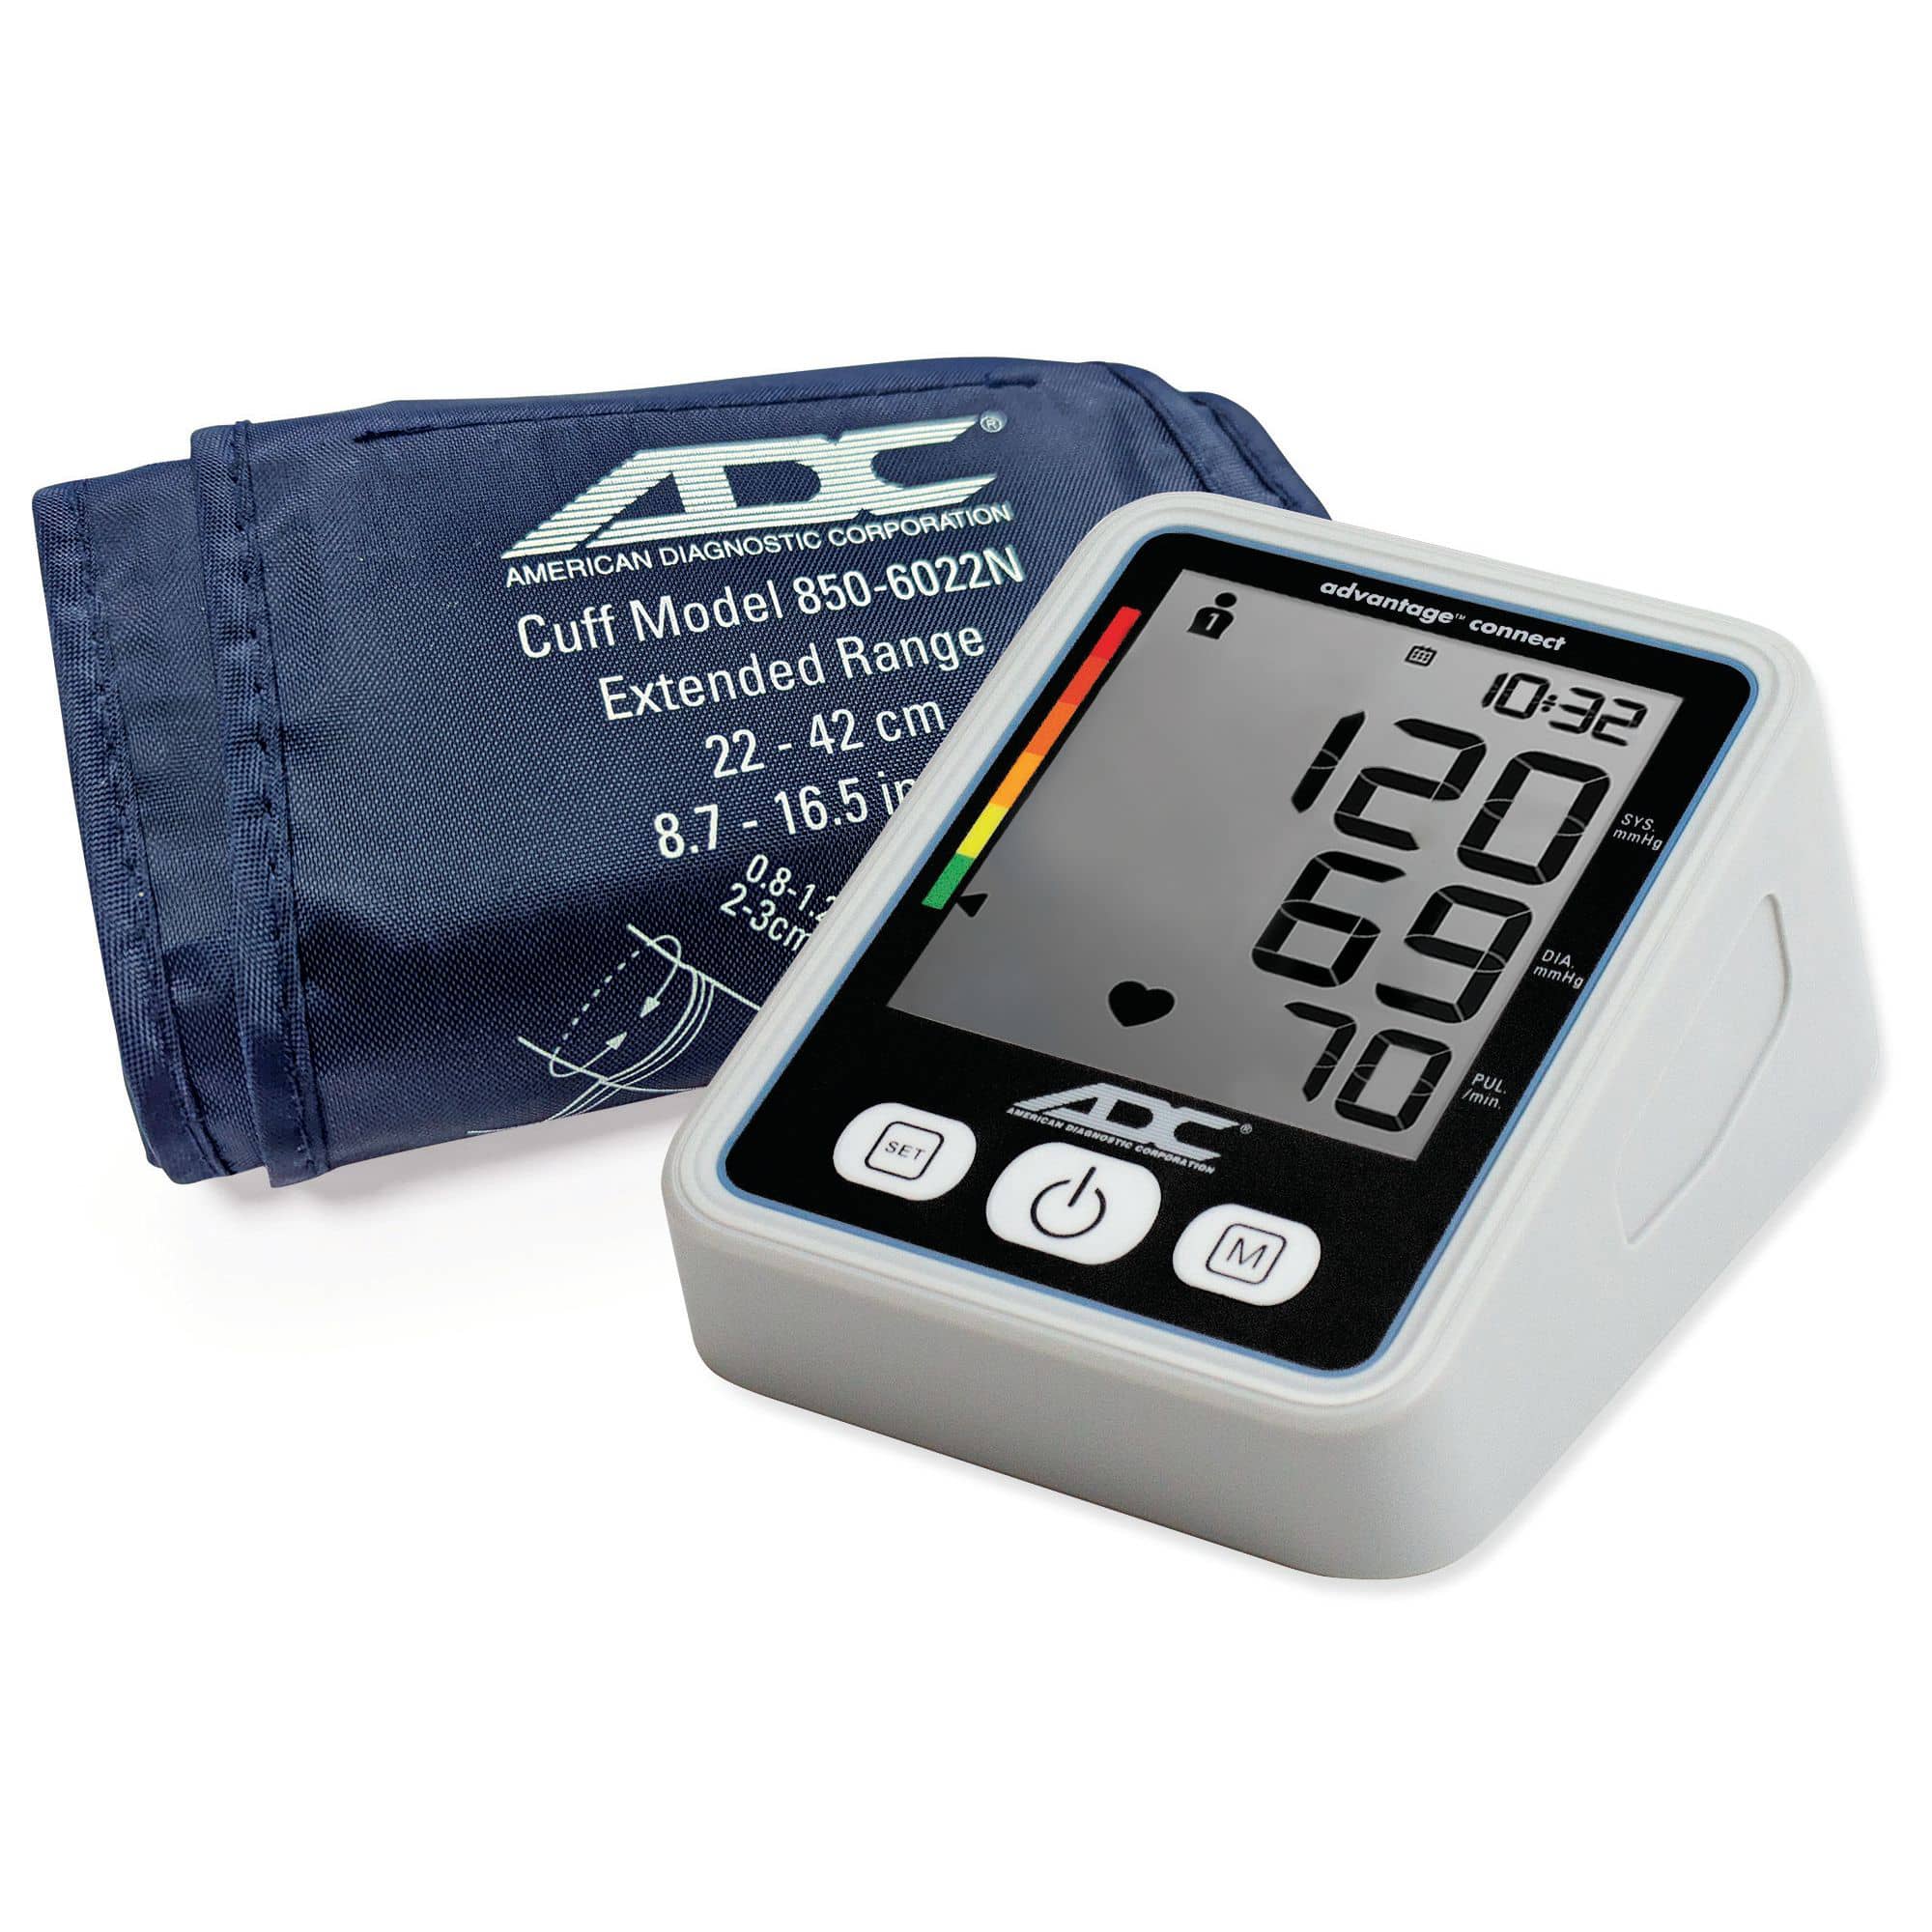 ADC Advantage Connect 6024N Upper-Arm Digital Home Blood Pressure Monitor